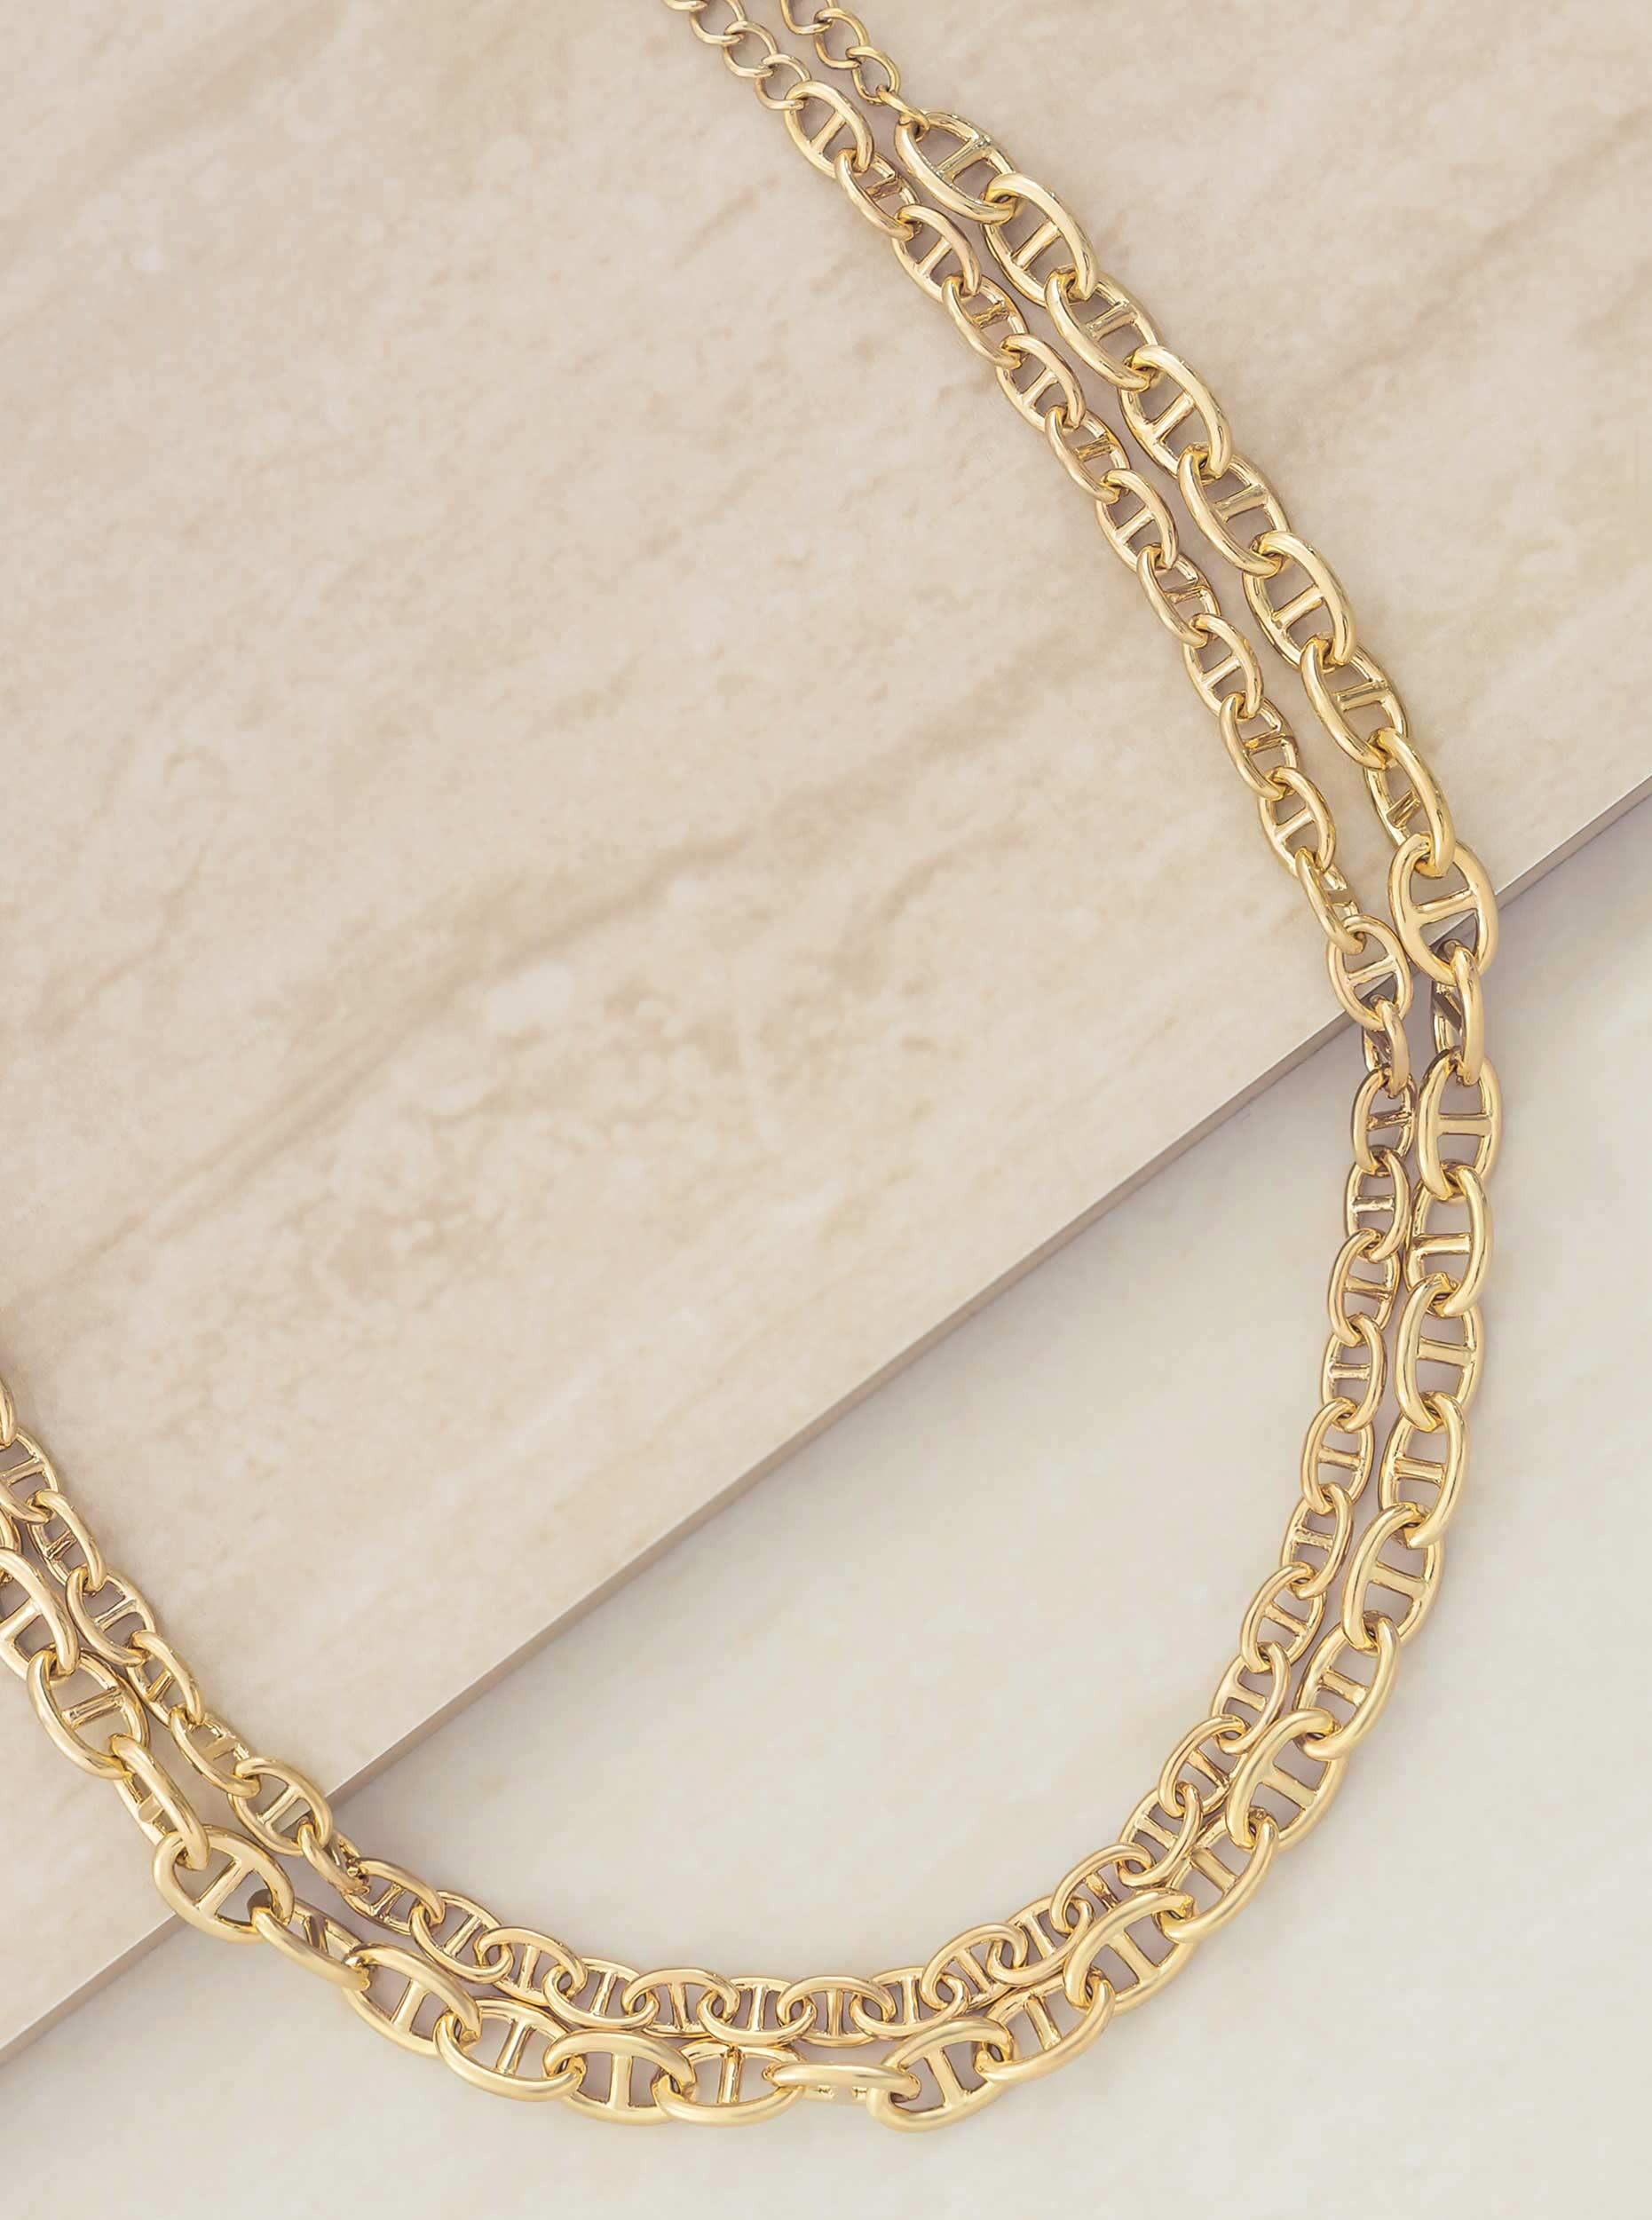 ettika necklace 18k GOLD CHAIN LINK // NECKLACE